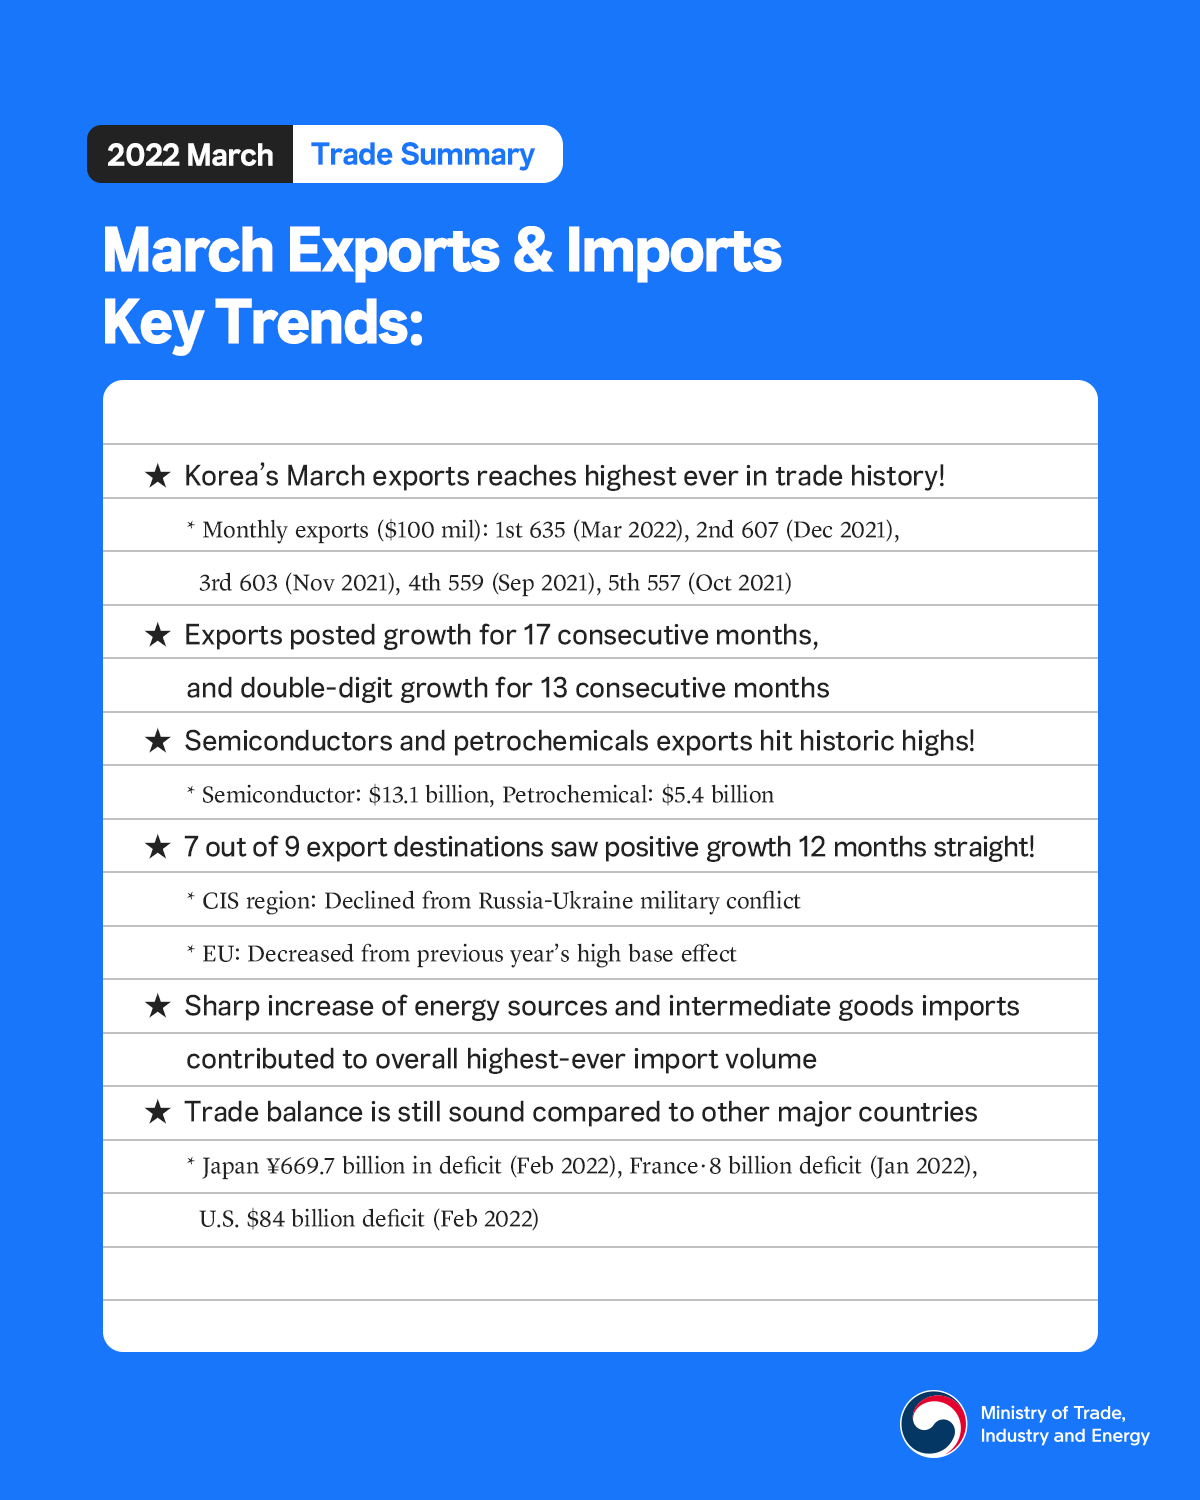 March exports make Korea's trade history! Image 1